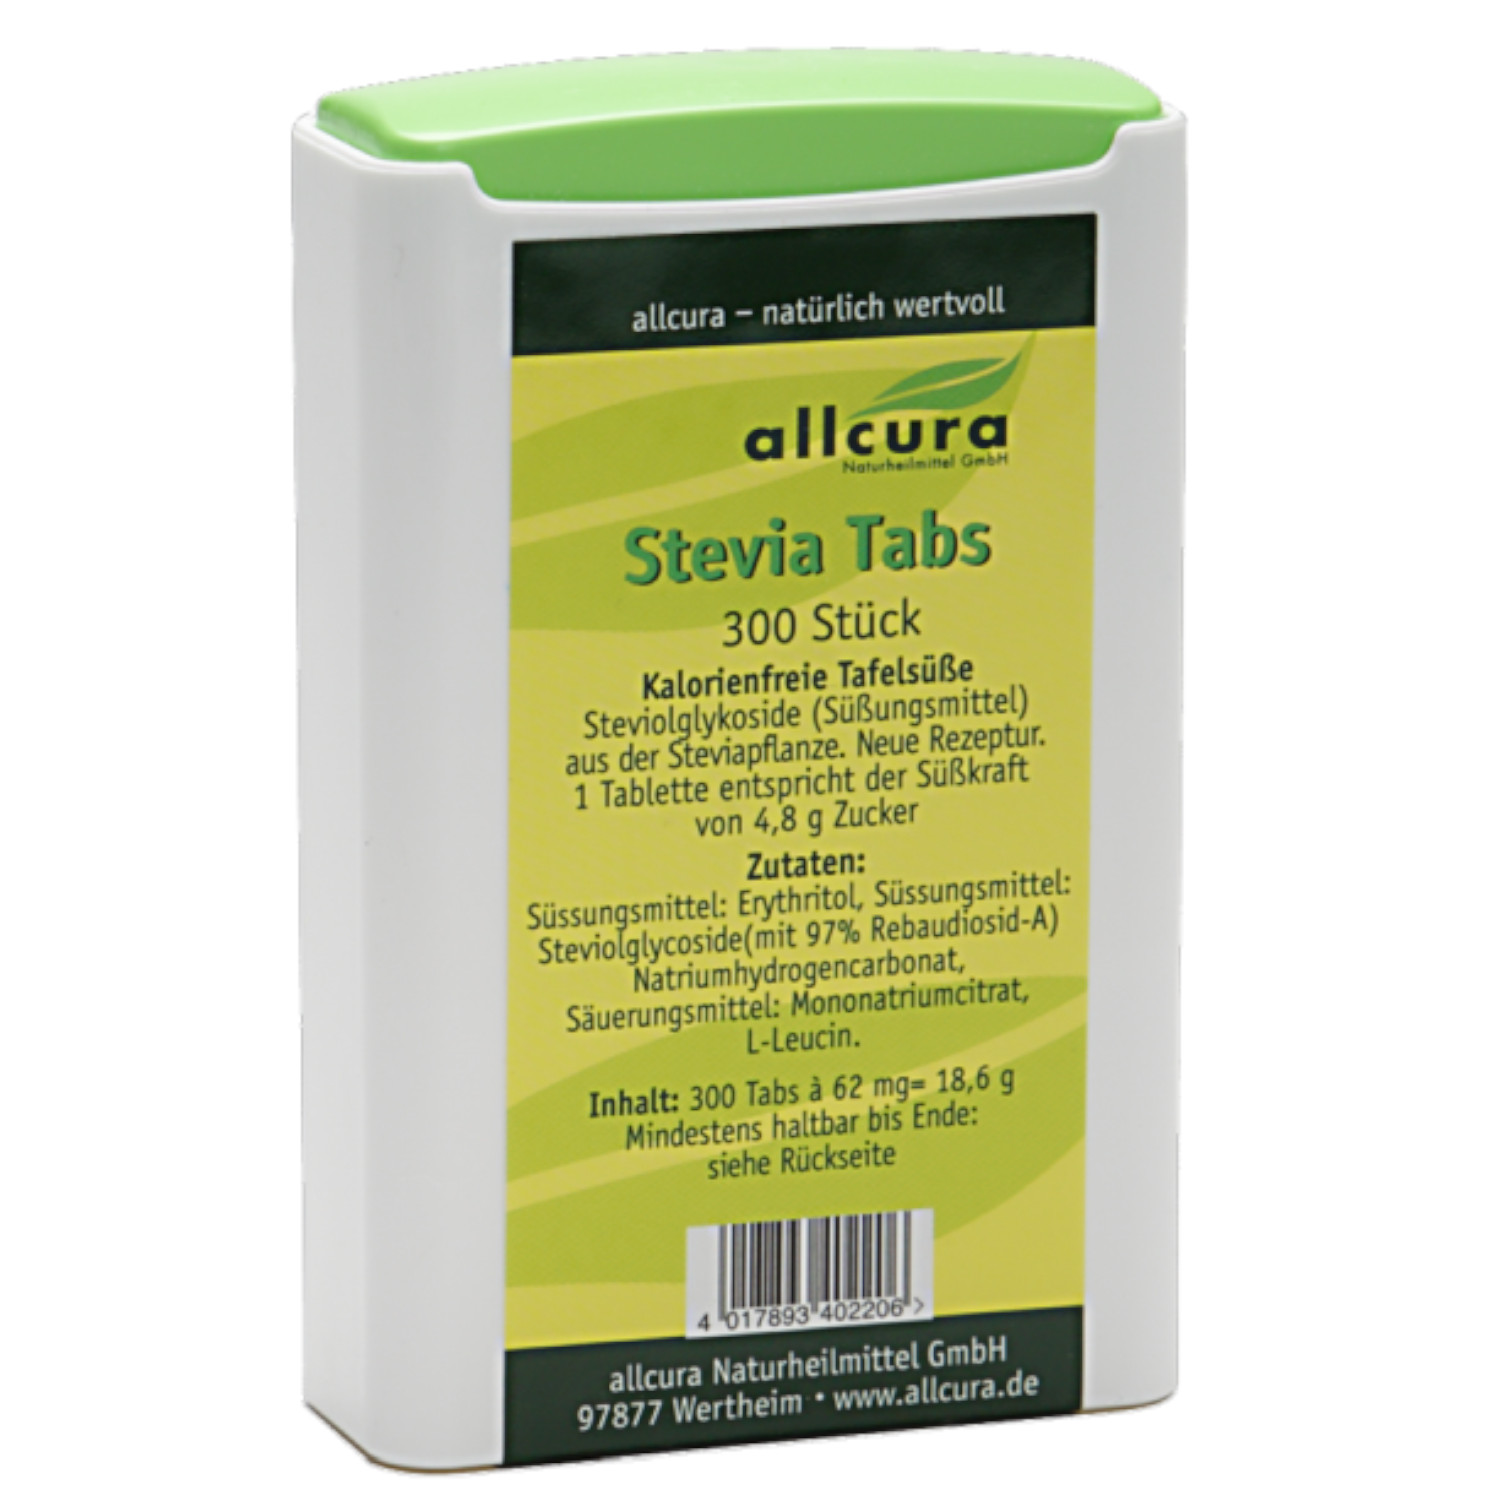 Stevia Tabs von allcura - 300 Stück